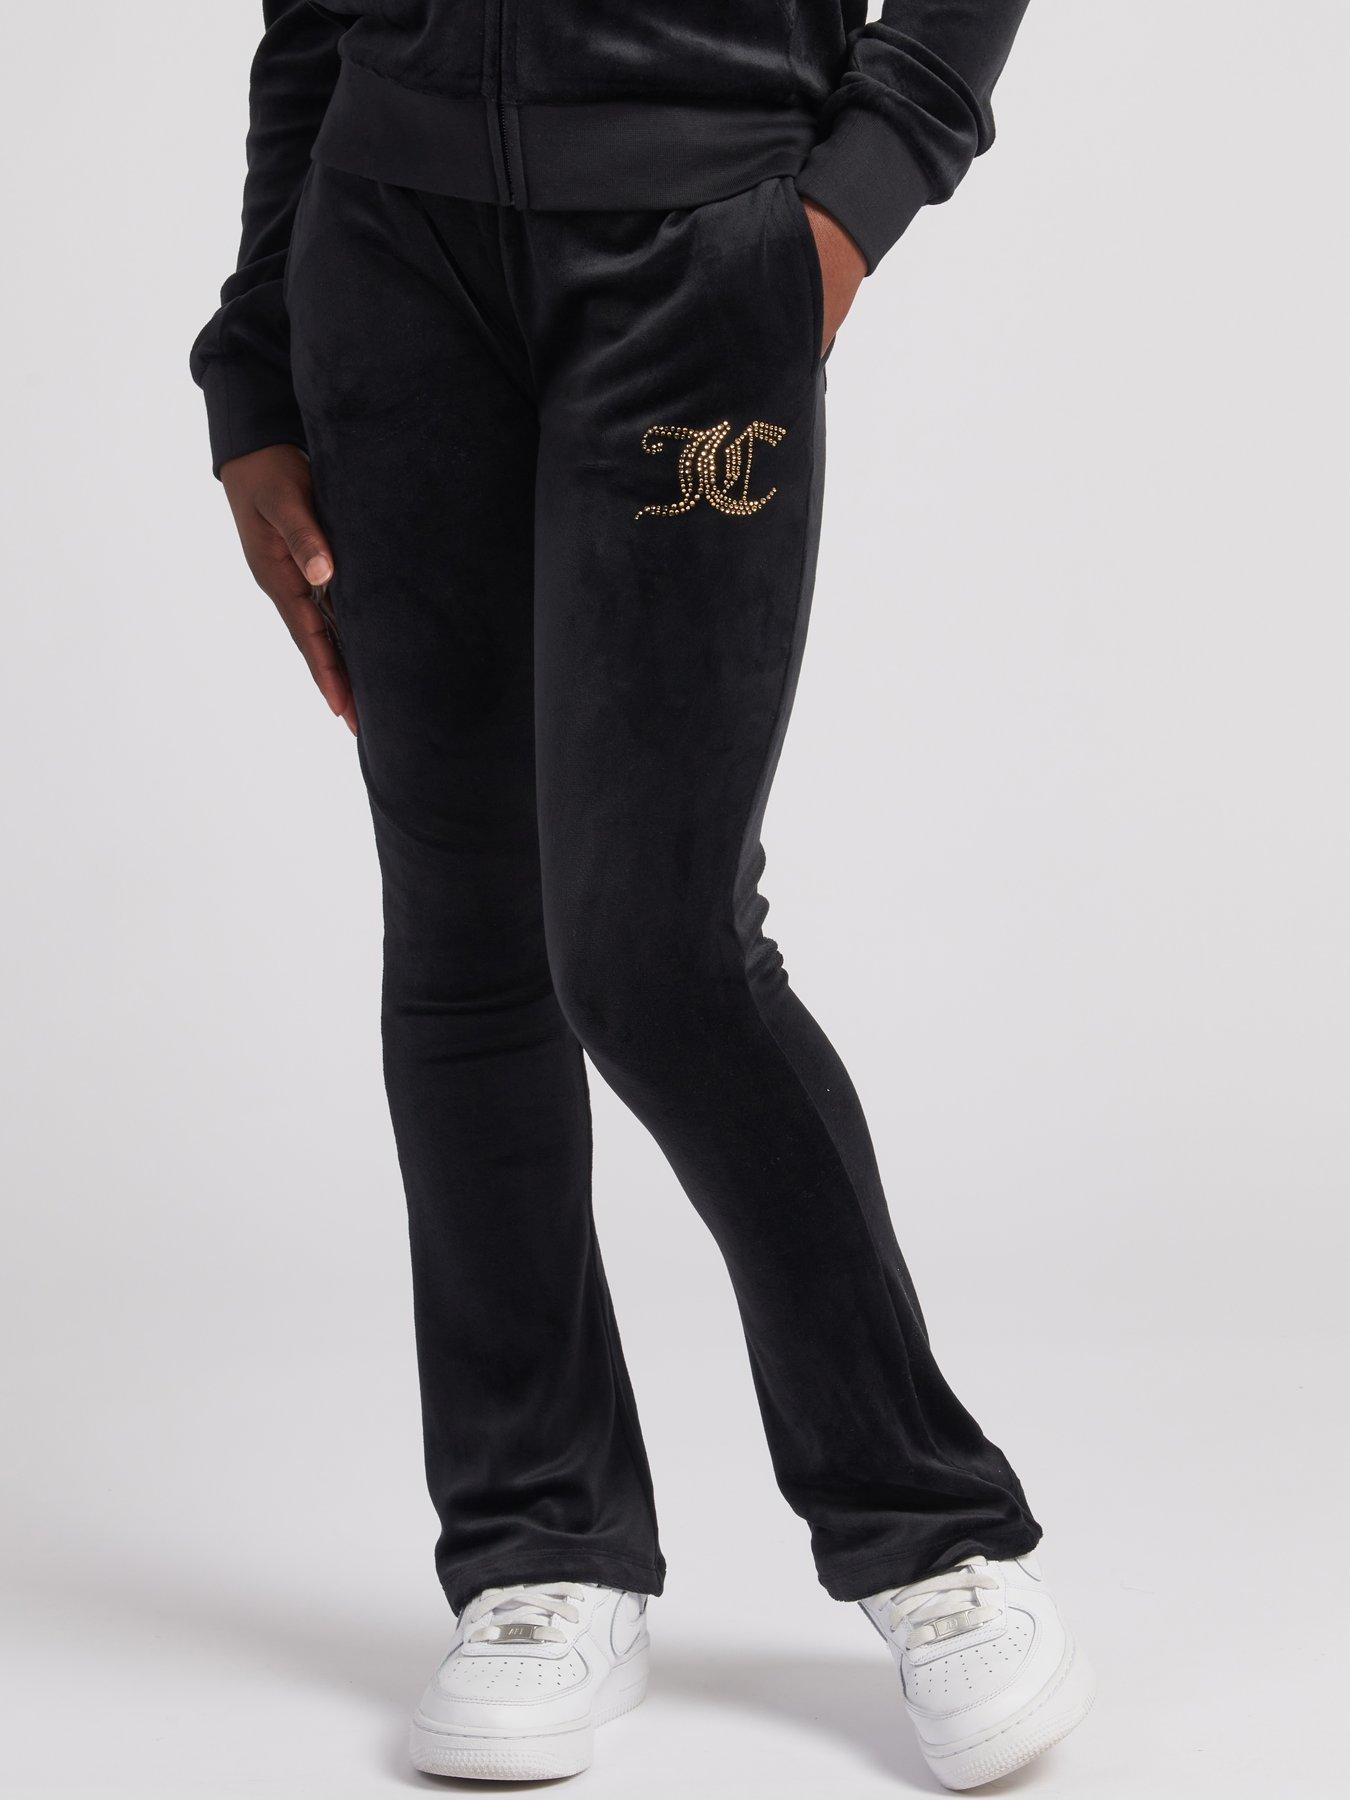 Juicy Couture Sports Leggings Womens Black Size Medium White Stitch